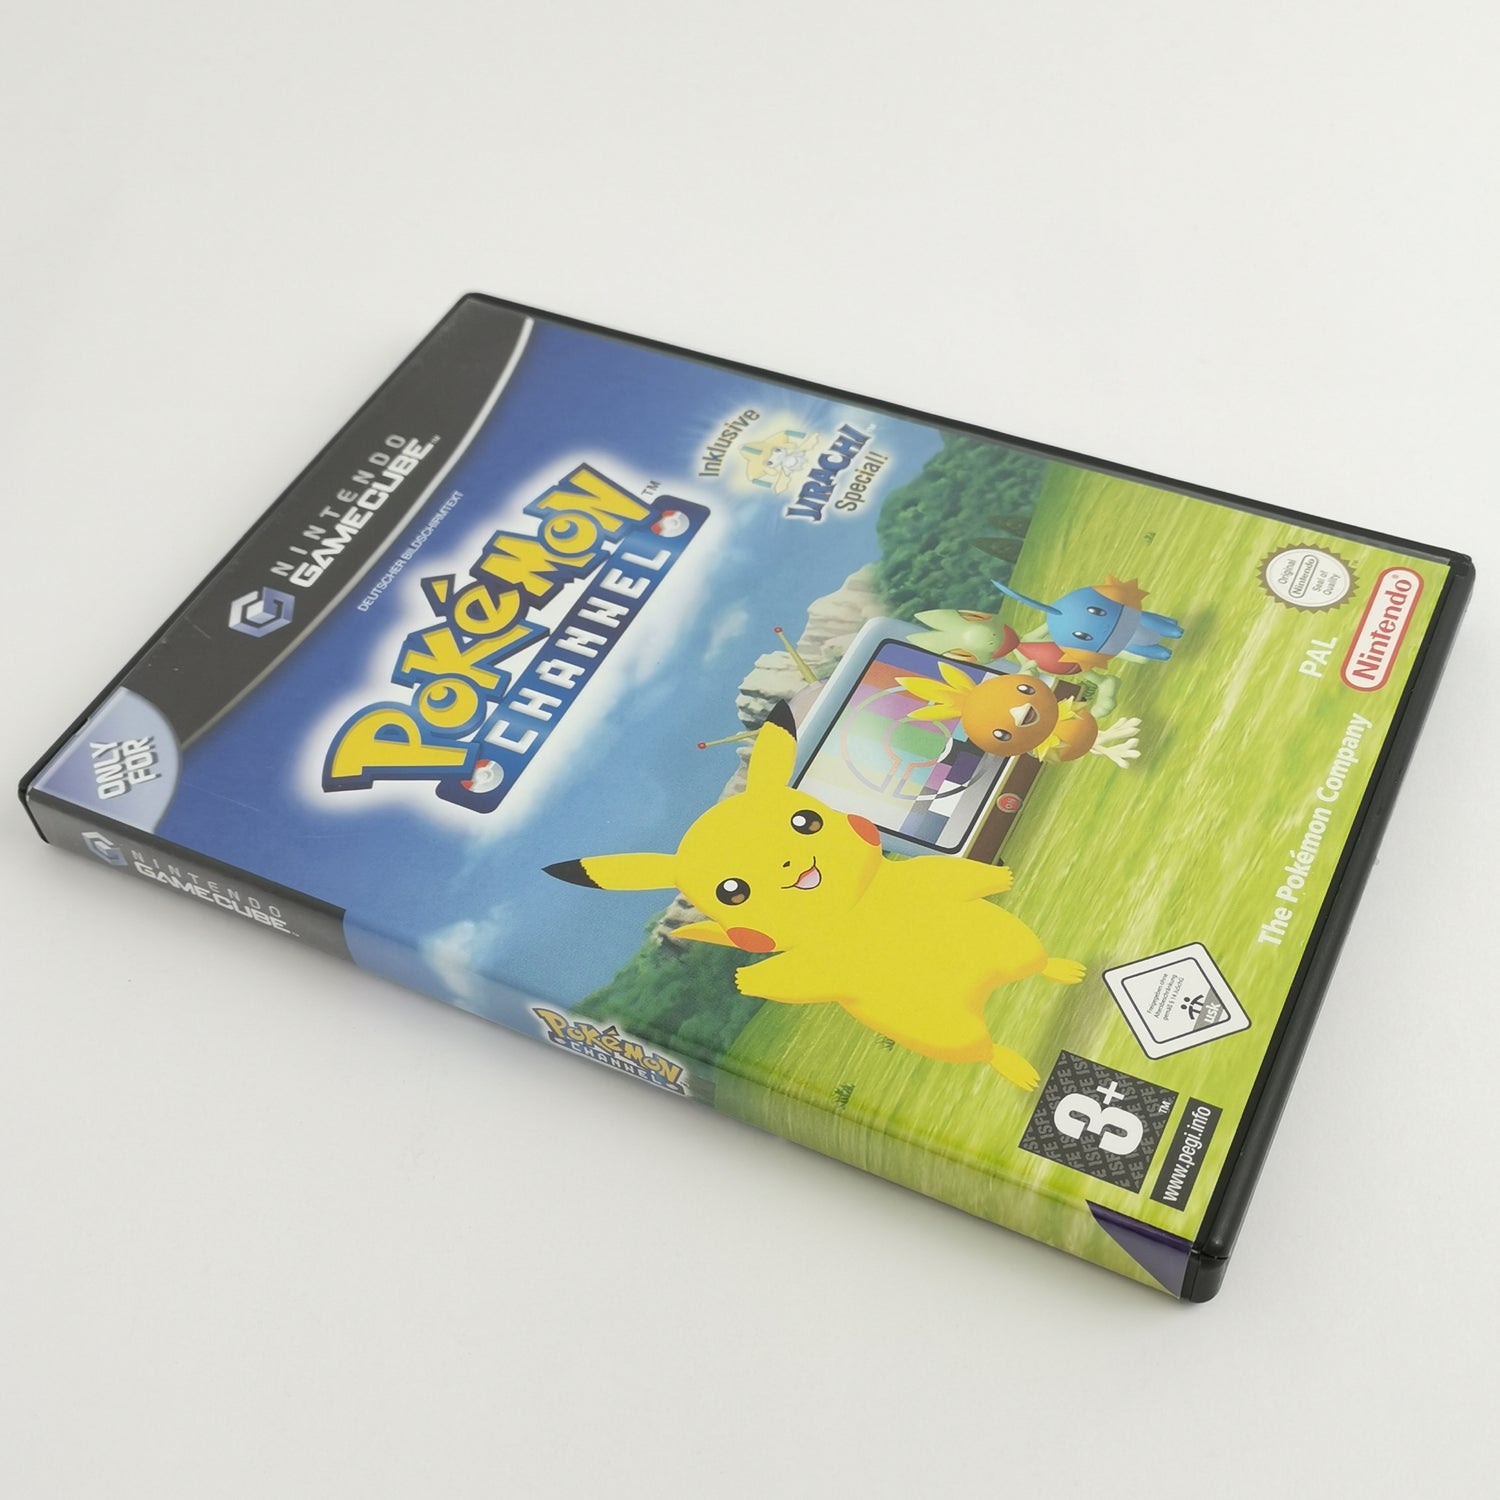 Nintendo Gamecube Spiel : Pokemon Channel | The Pok. Company - dt. PAL OVP